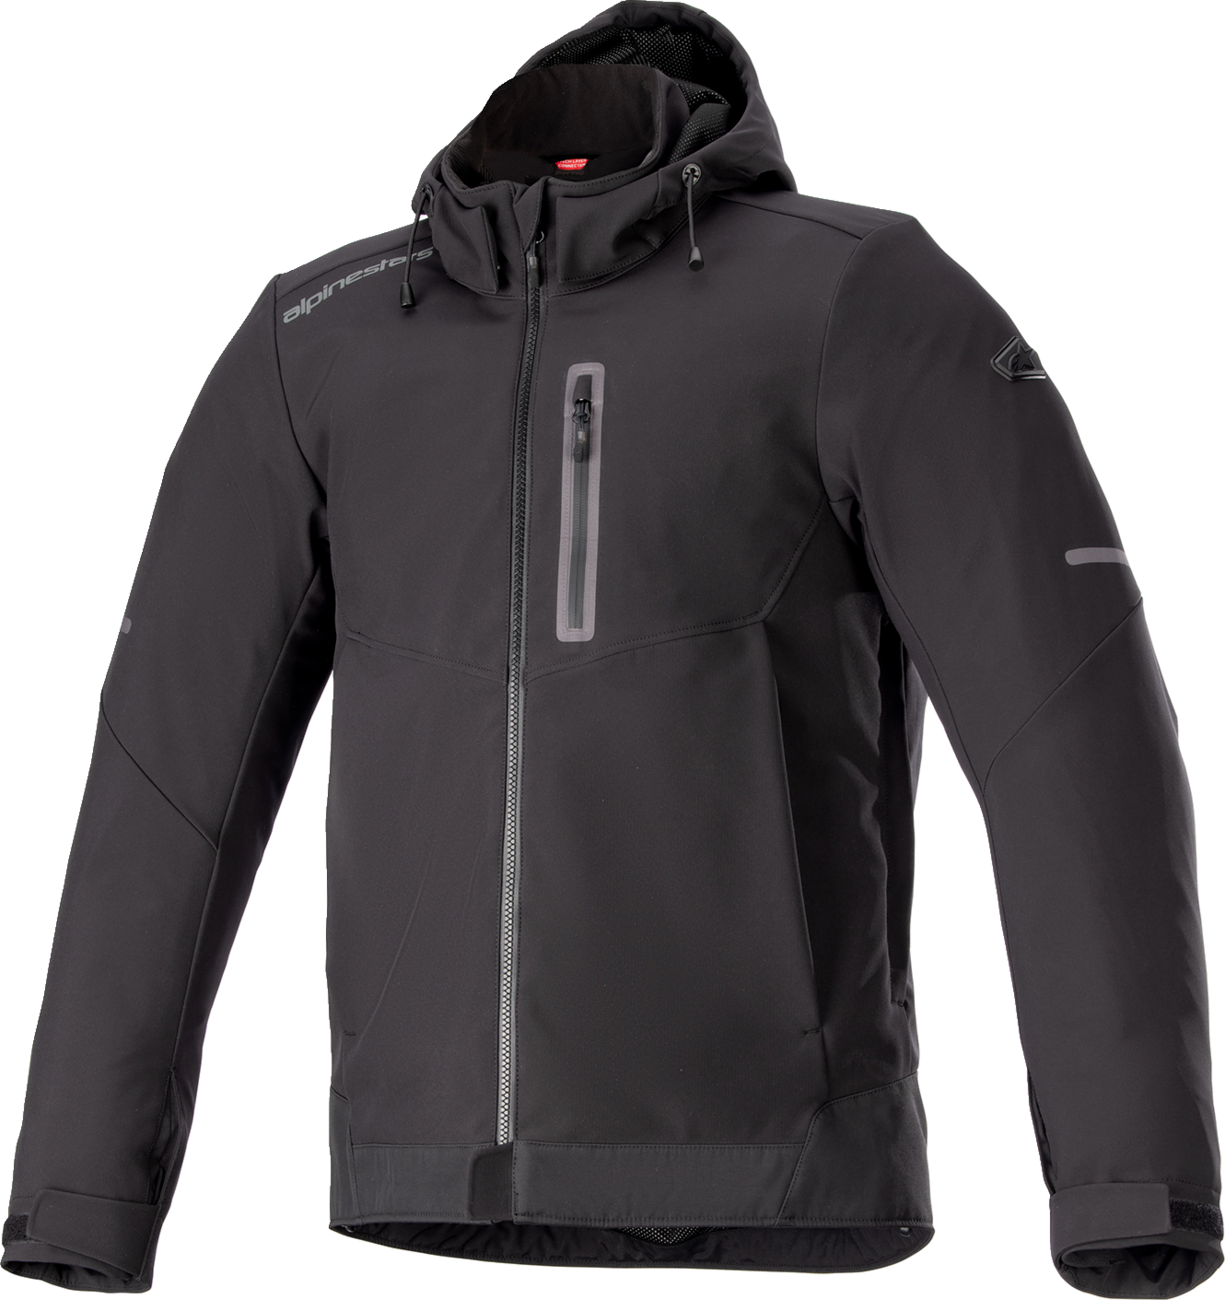 ALPINESTARS Neo Waterproof Jacket - Black - Small 4208023-1100-S